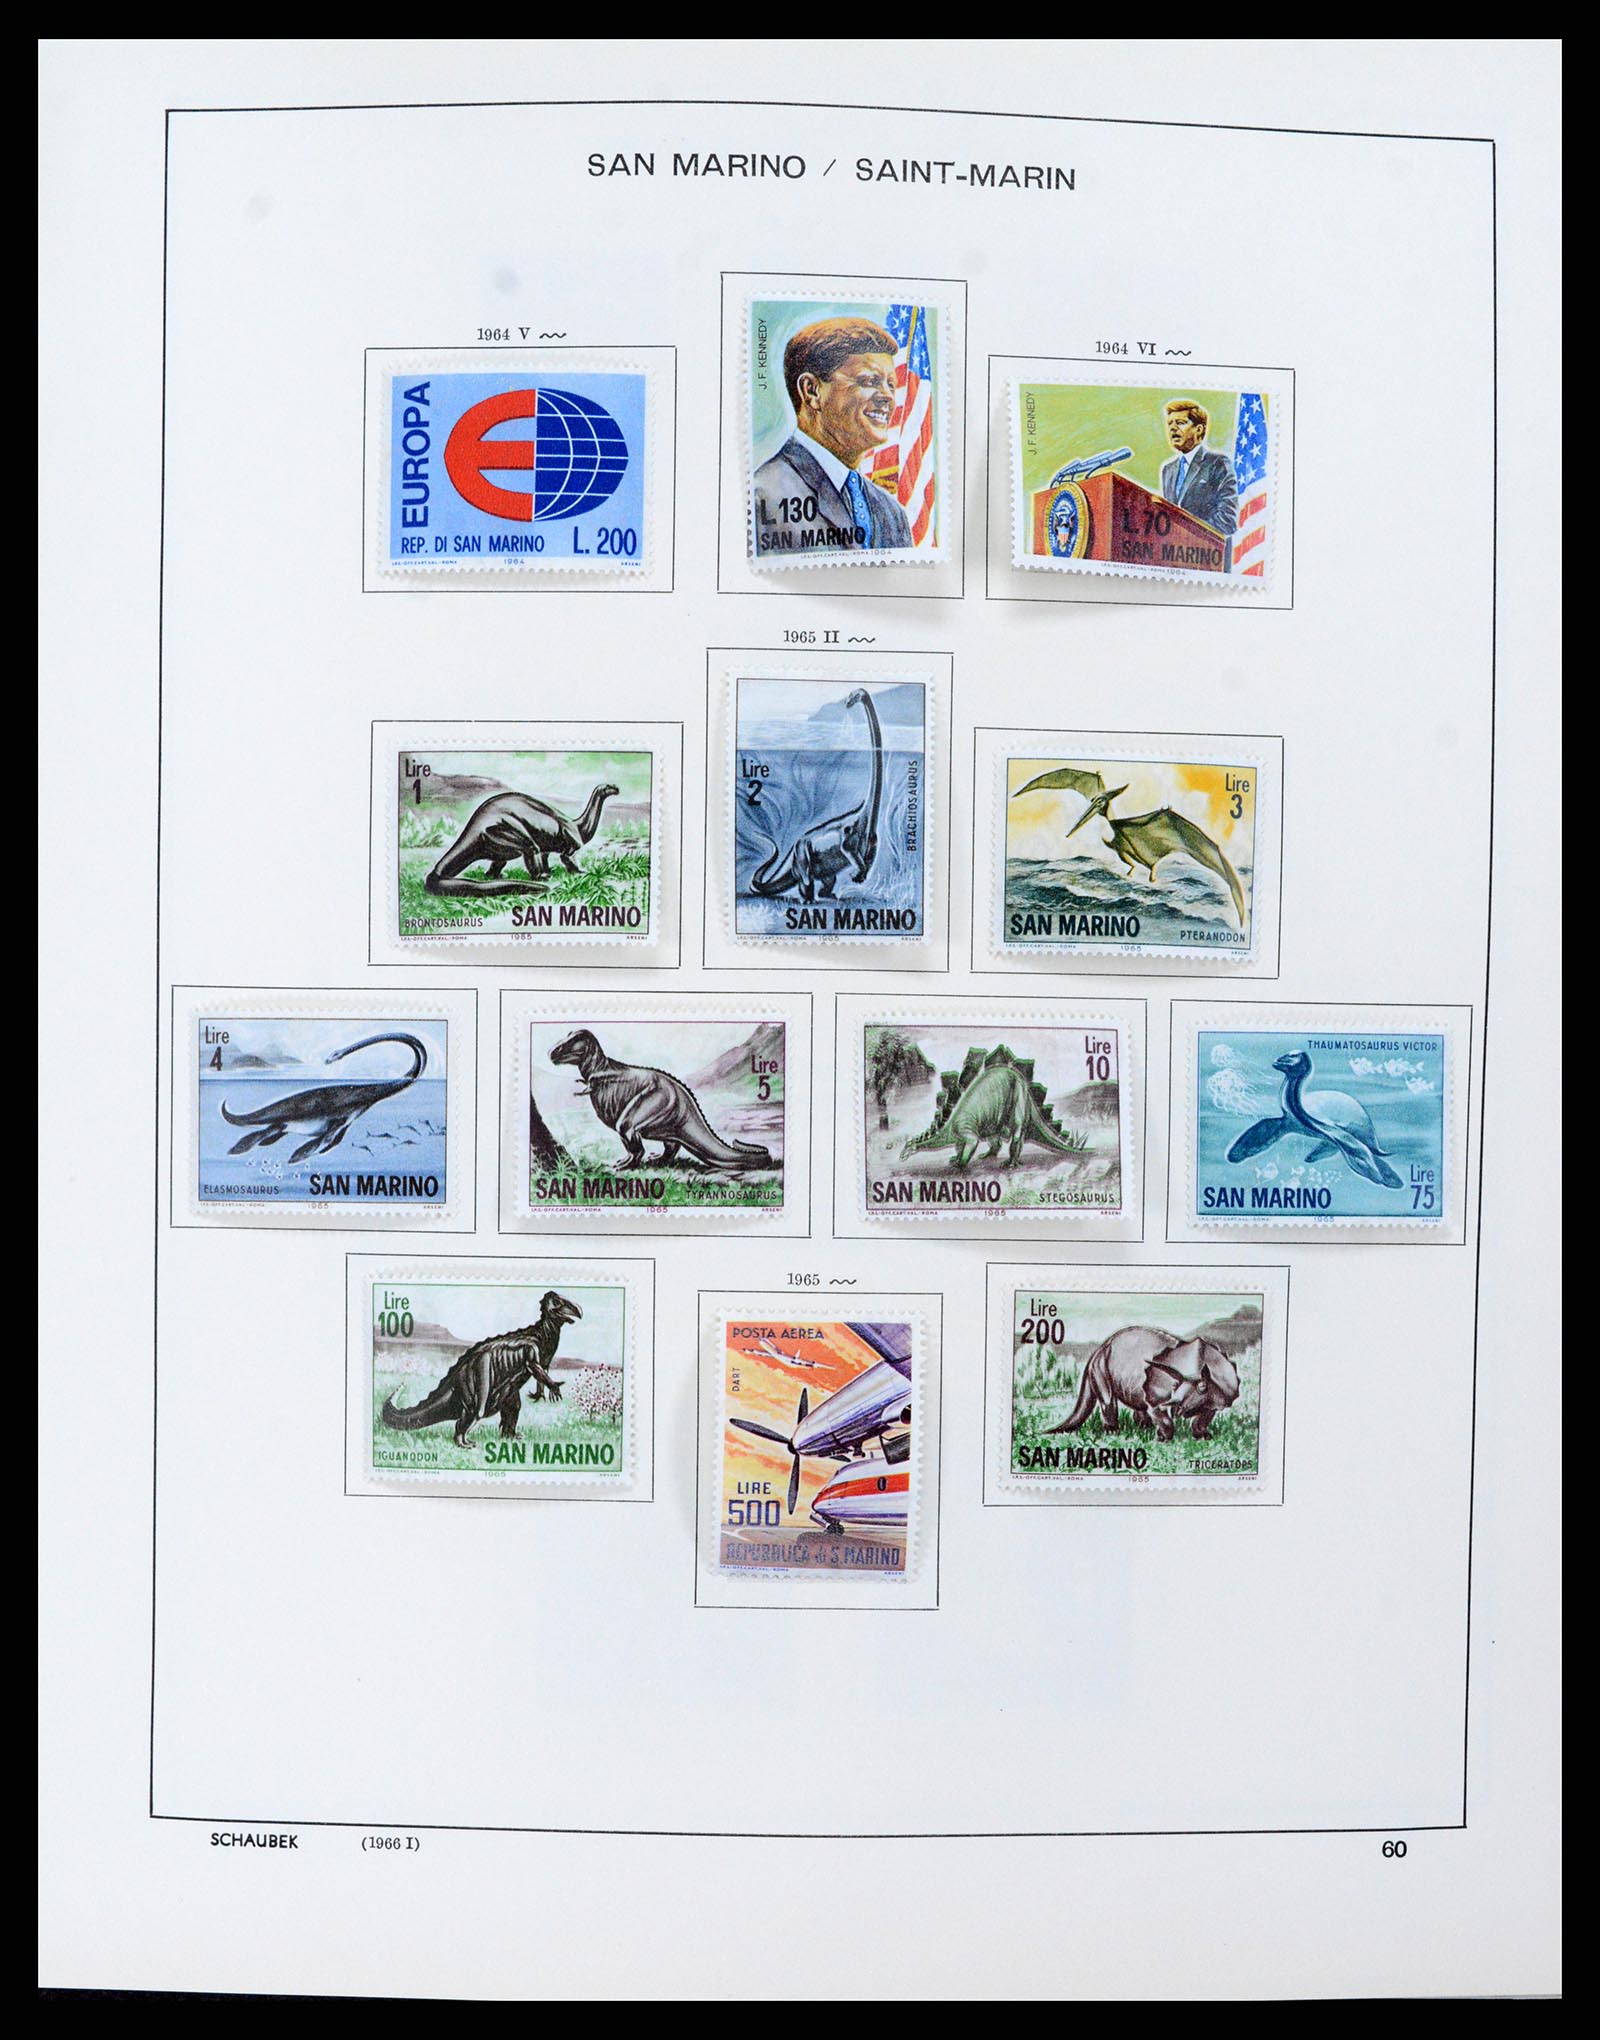 37556 063 - Stamp collection 37556 San Marino 1877-2017.